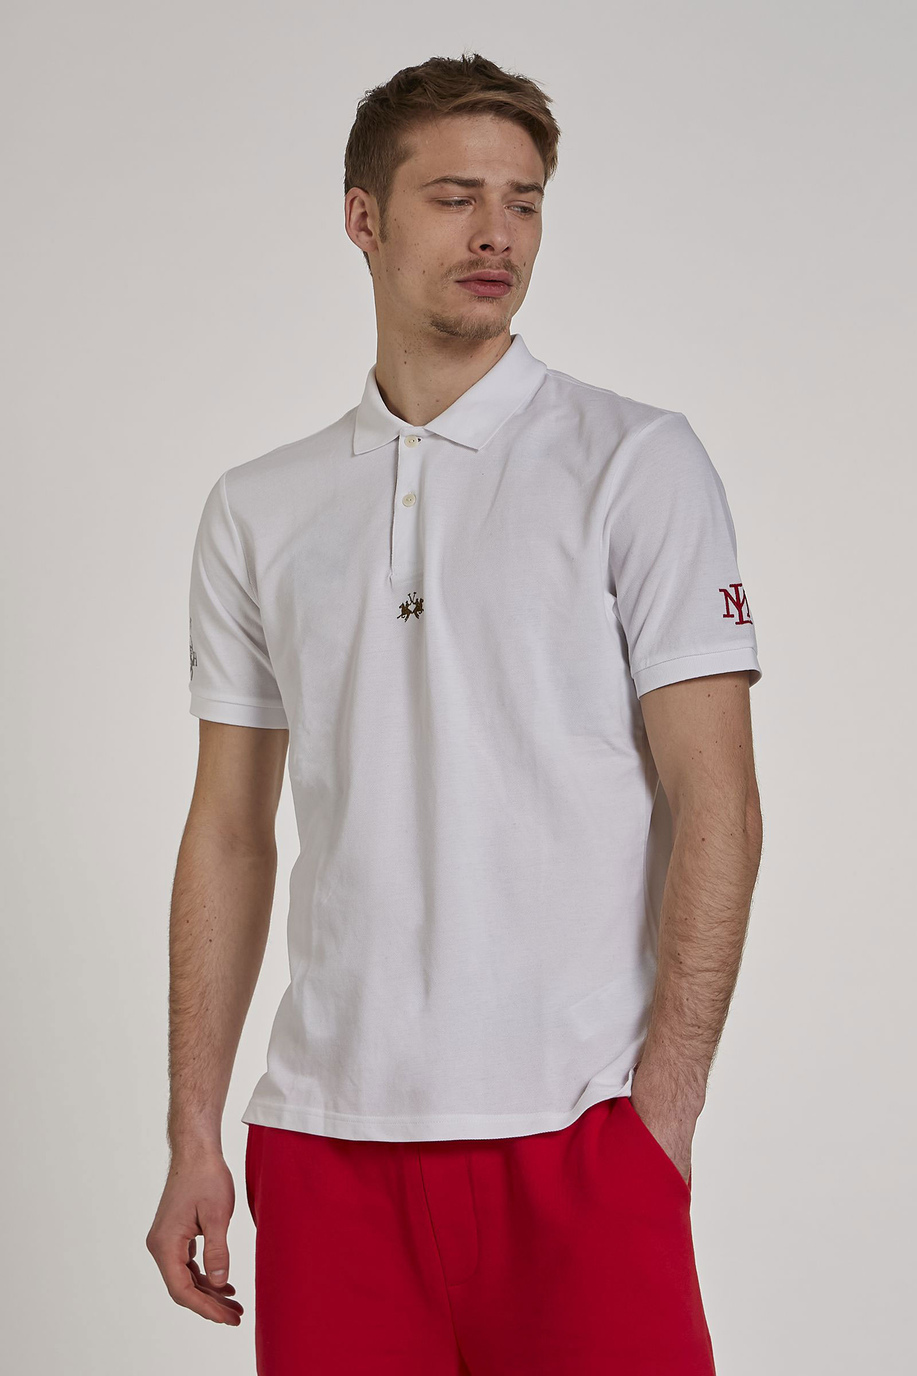 Herren-Poloshirt mit kurzen Ärmeln aus 100 % Baumwolle im Regular Fit - England | La Martina - Official Online Shop